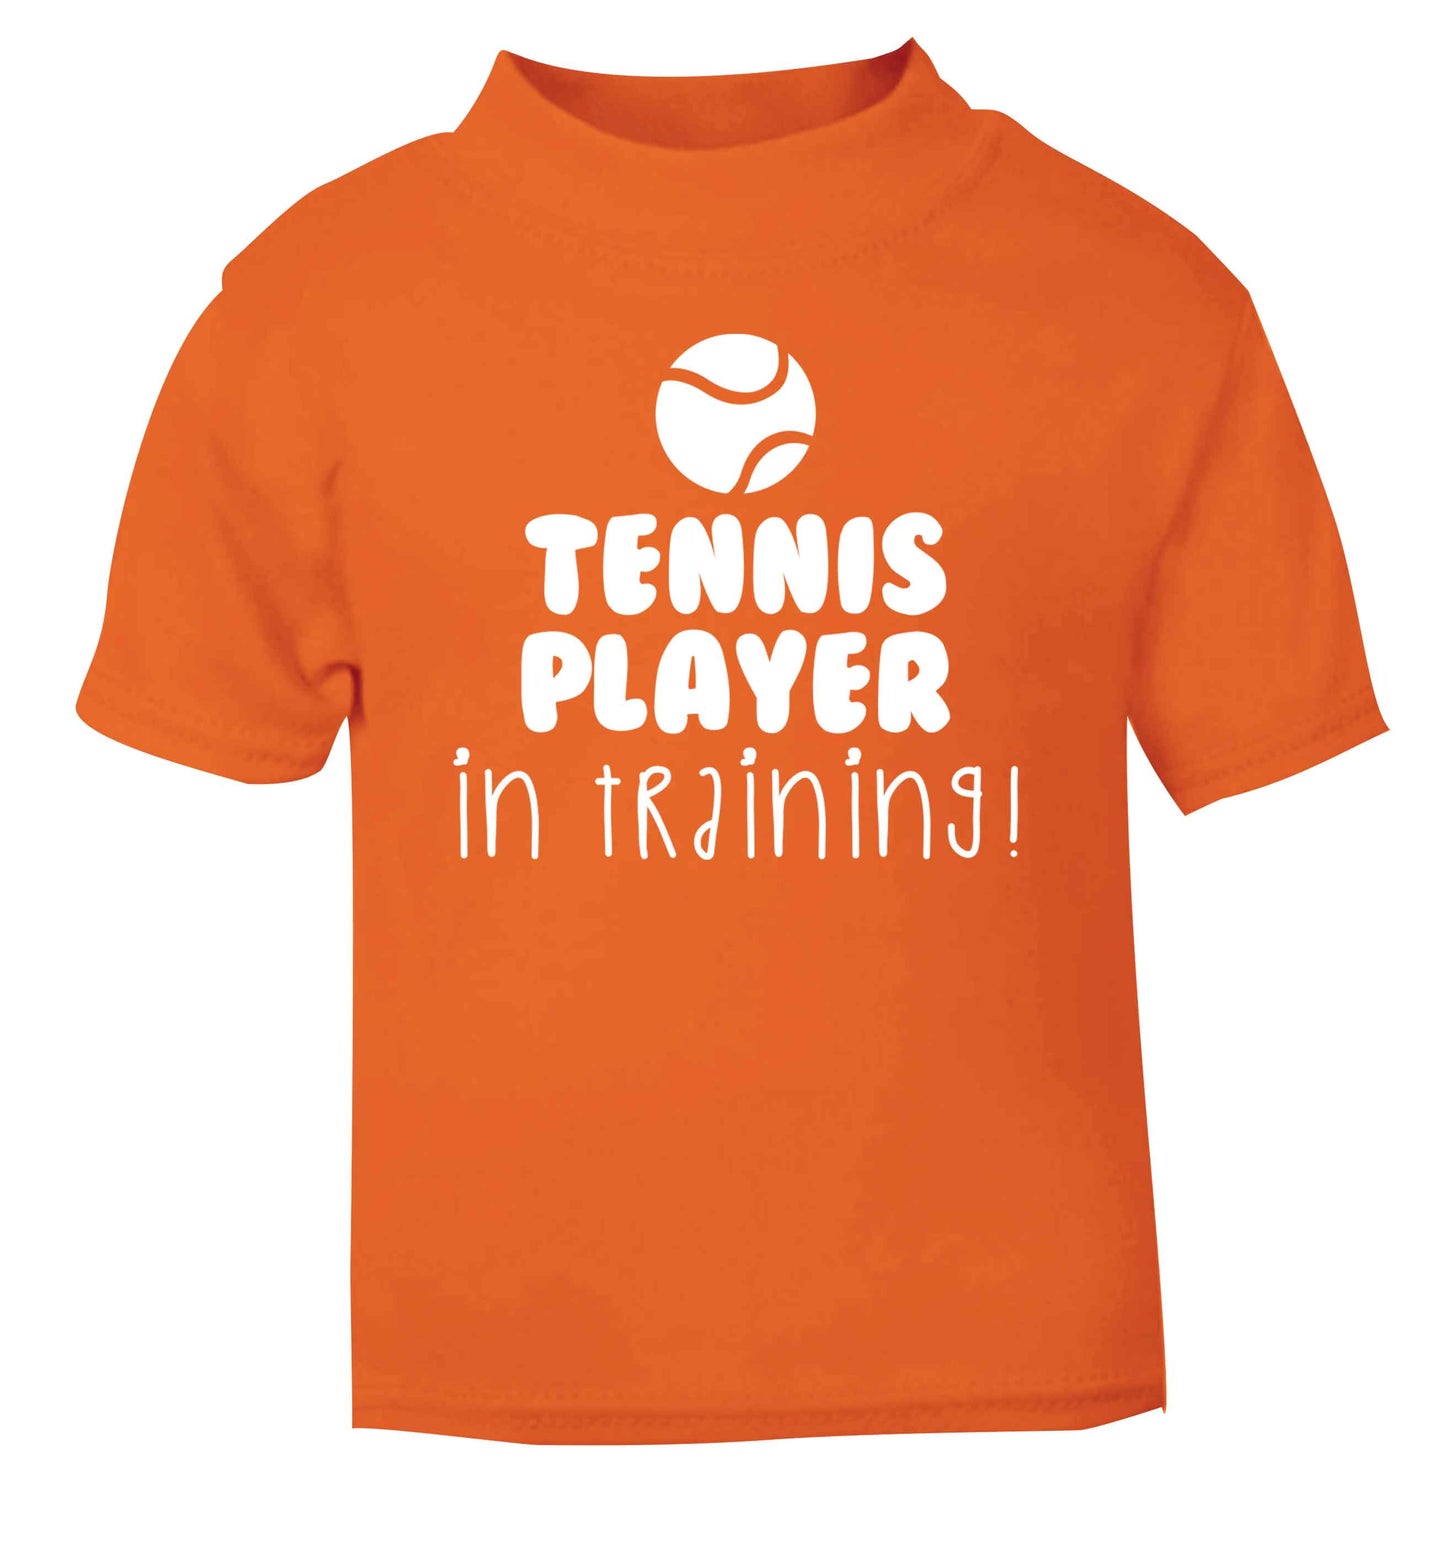 Tennis player in training orange Baby Toddler Tshirt 2 Years